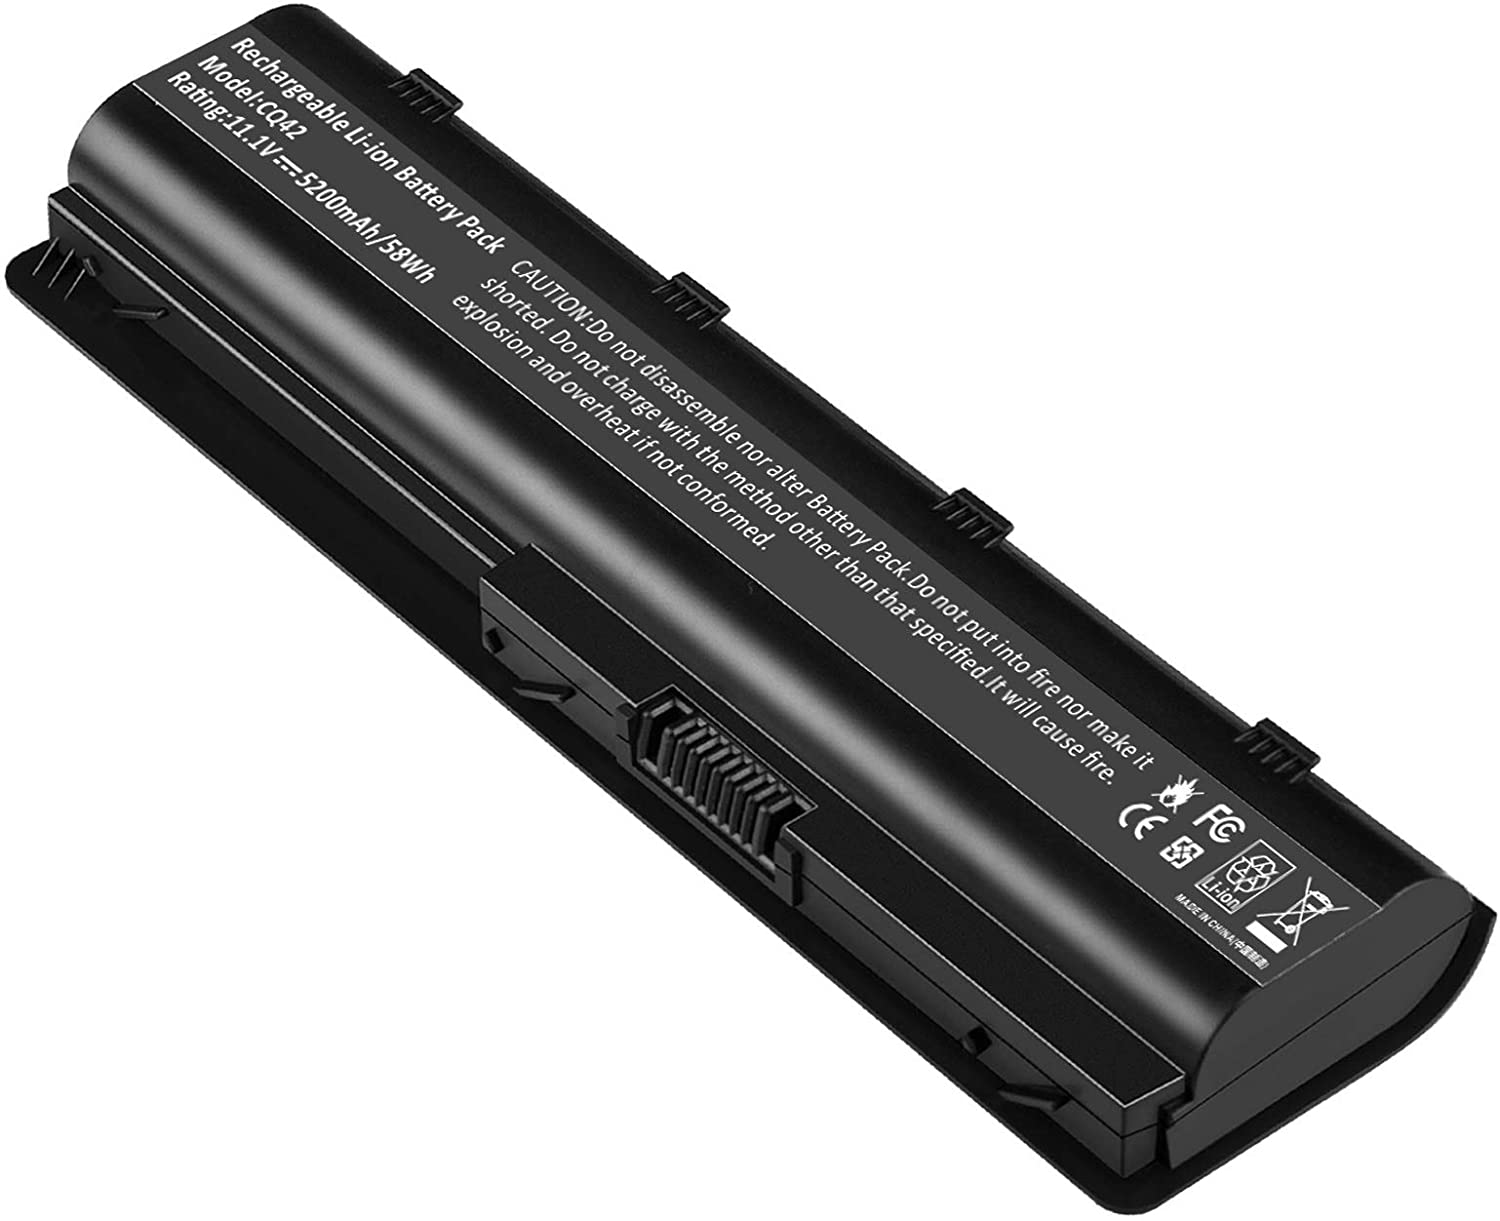 HP MU06 battery on sales